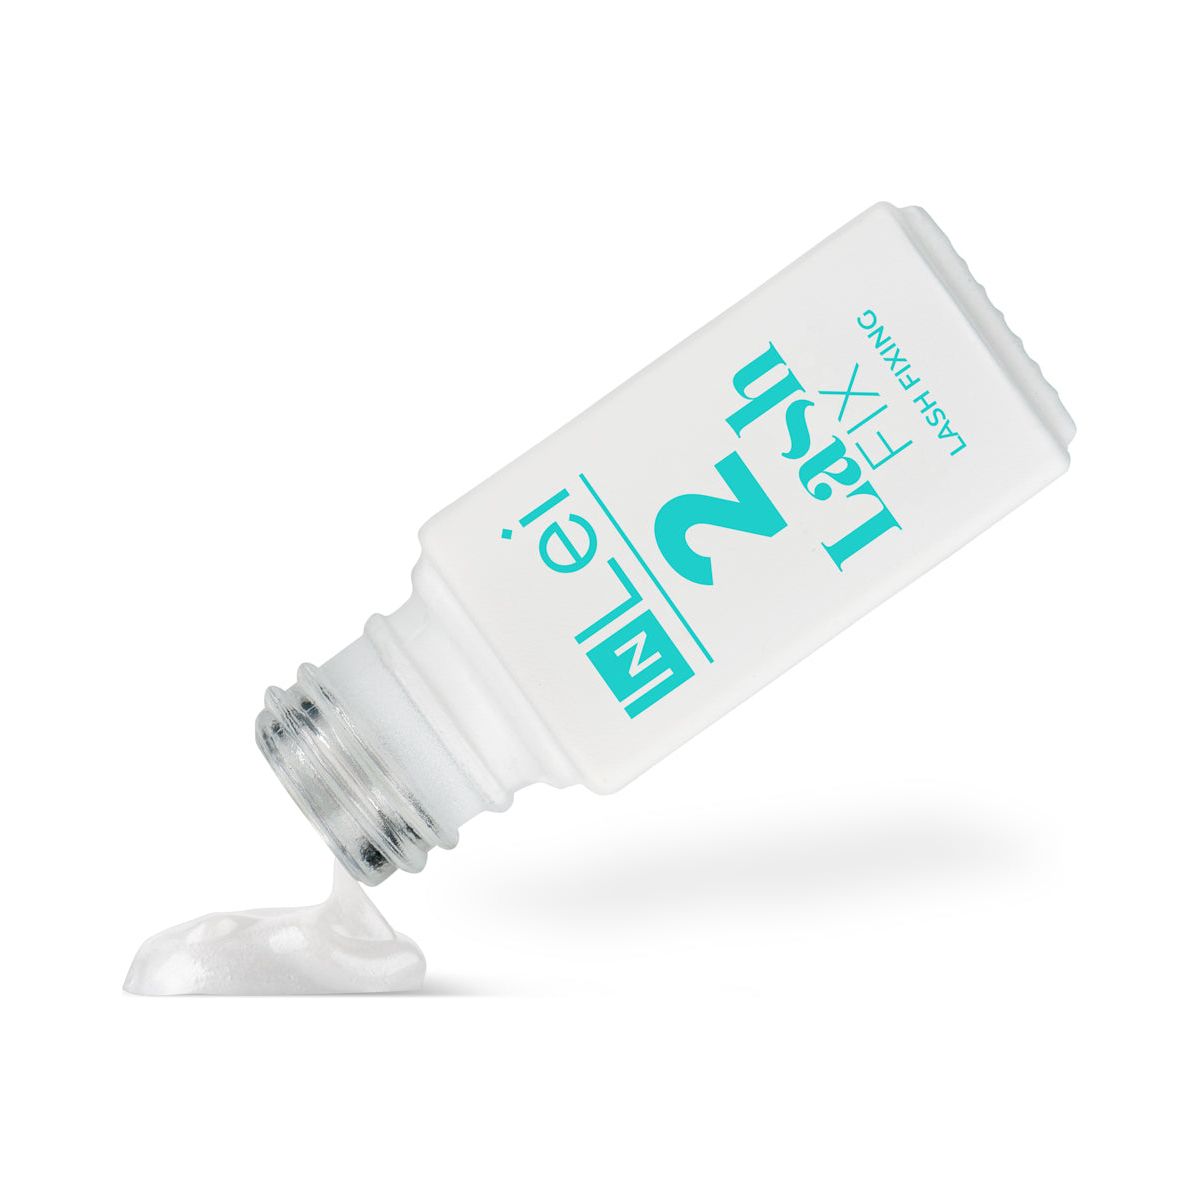 InLei - FIX2 - 4ml bottle - 25.9 series